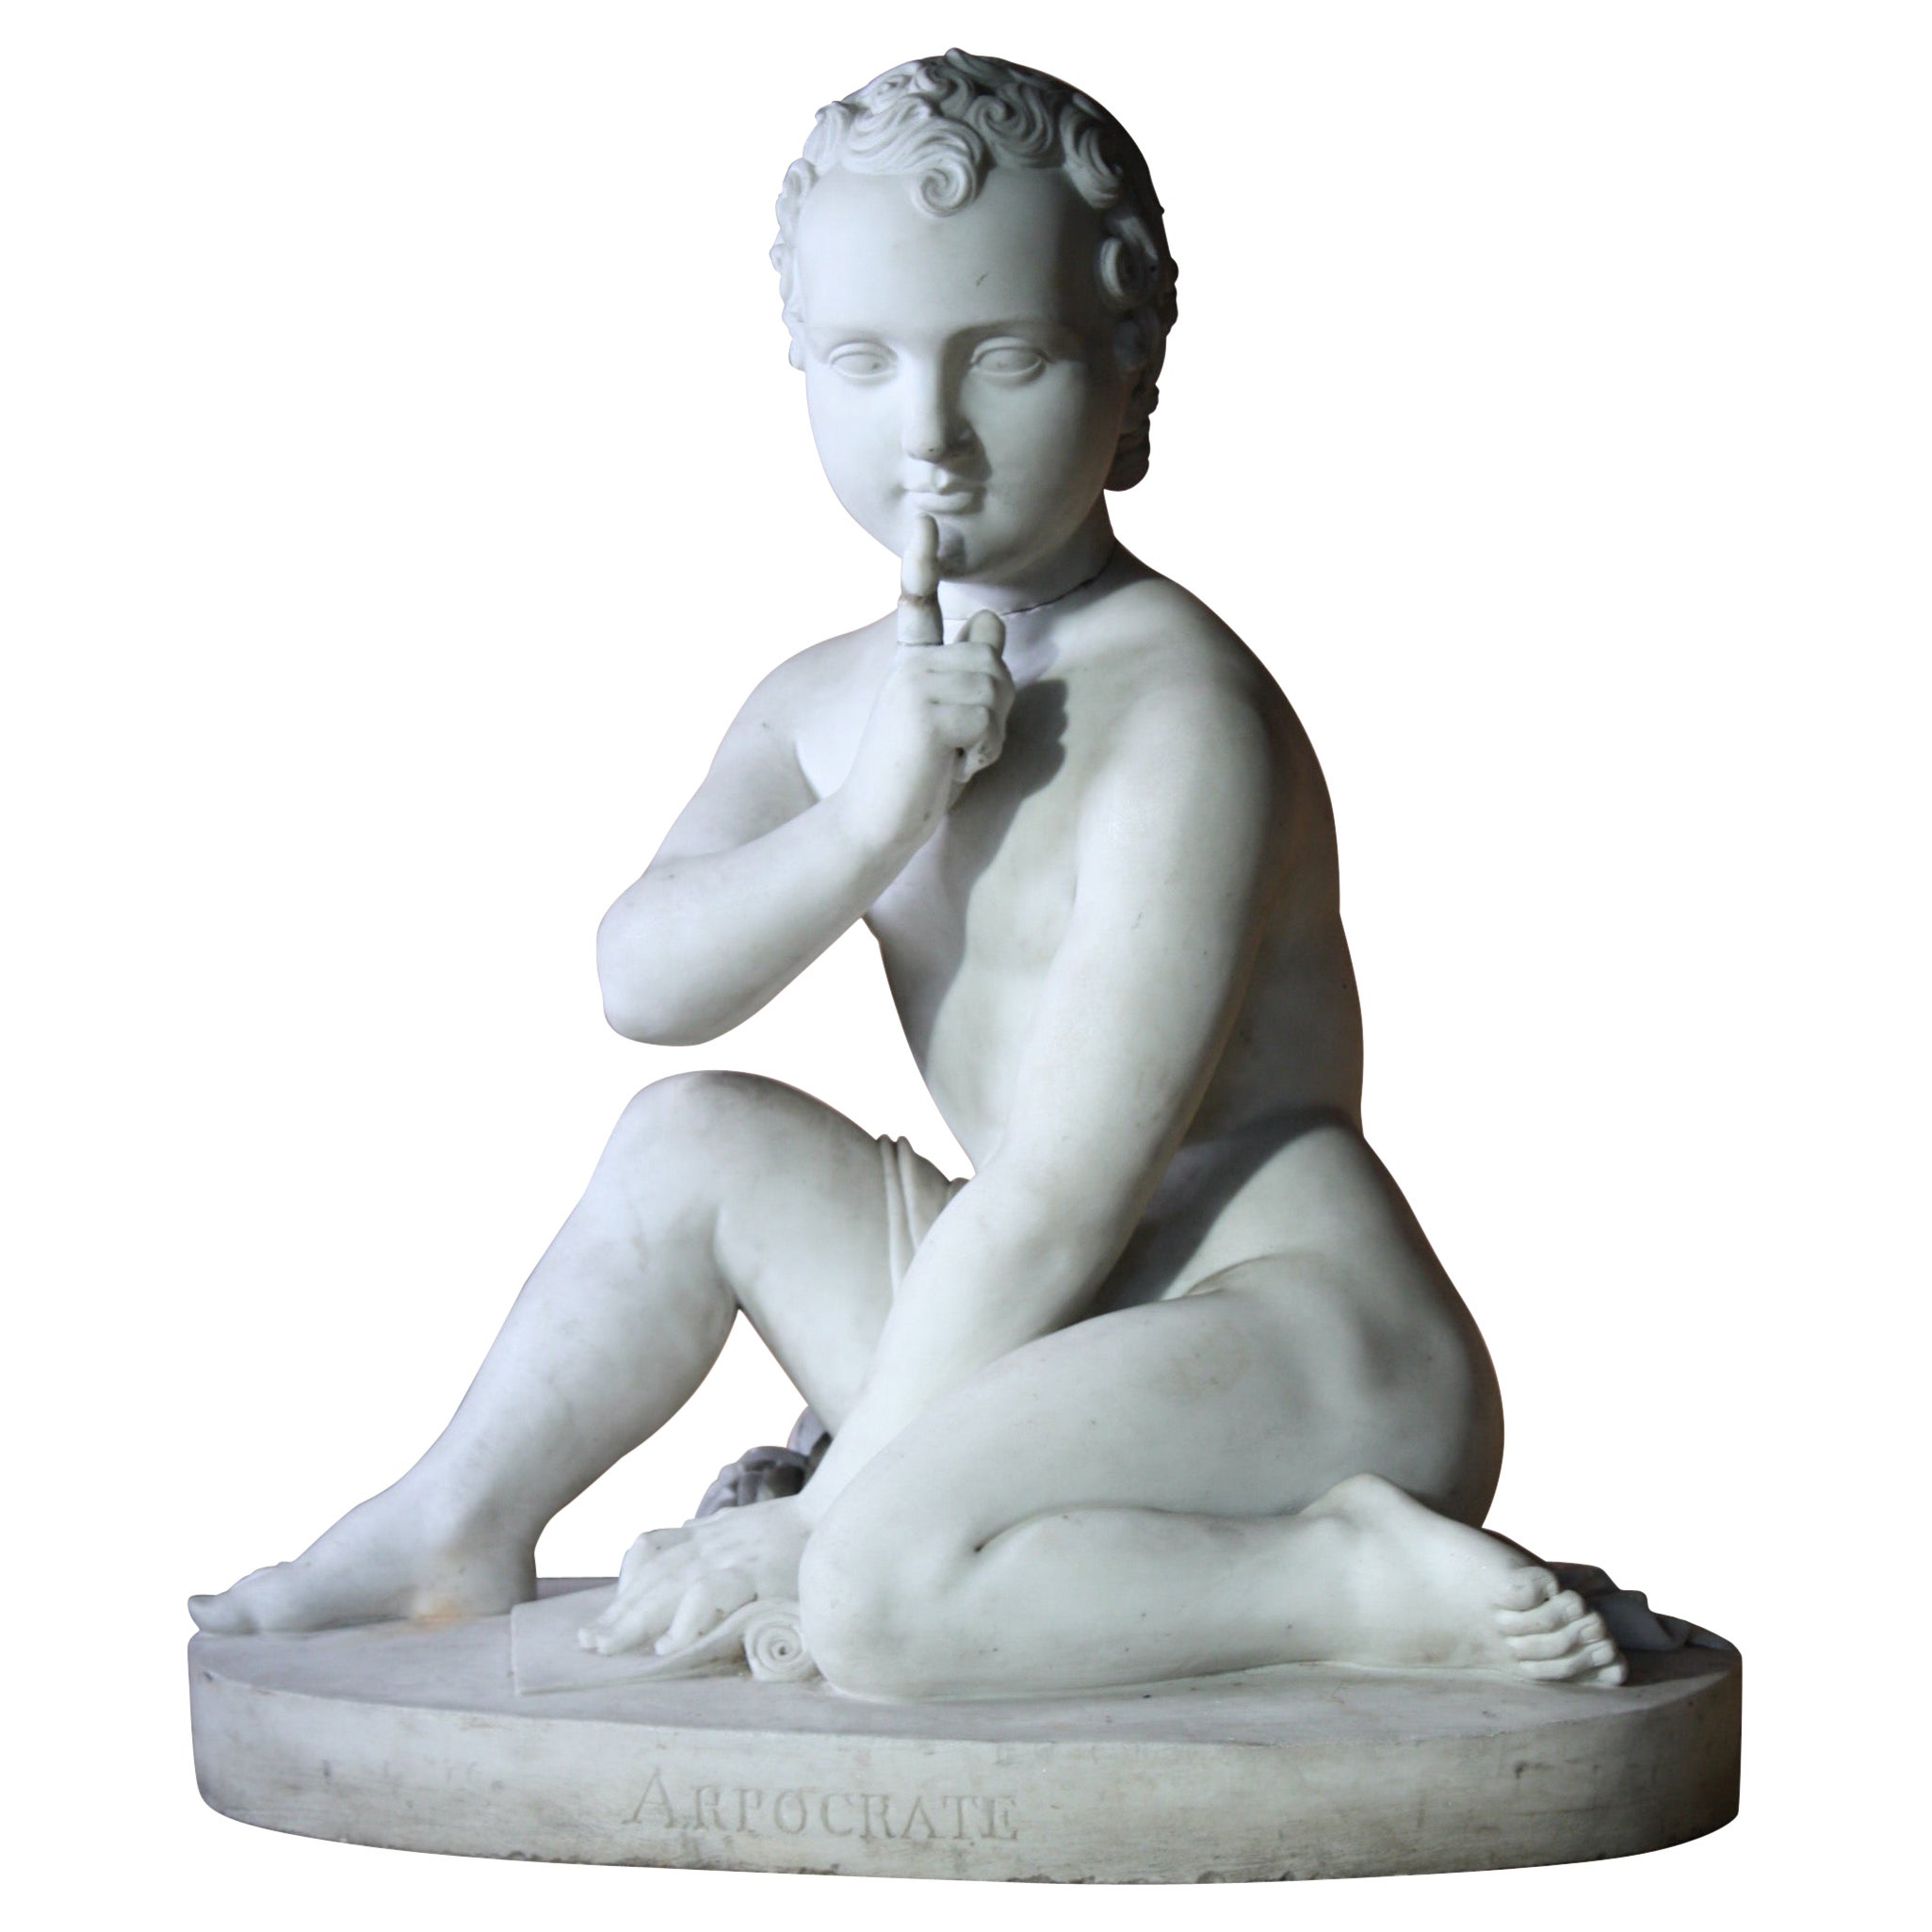 Early 19th Century Sculptor Francesco Pozzi "Arpocrate" For Sale